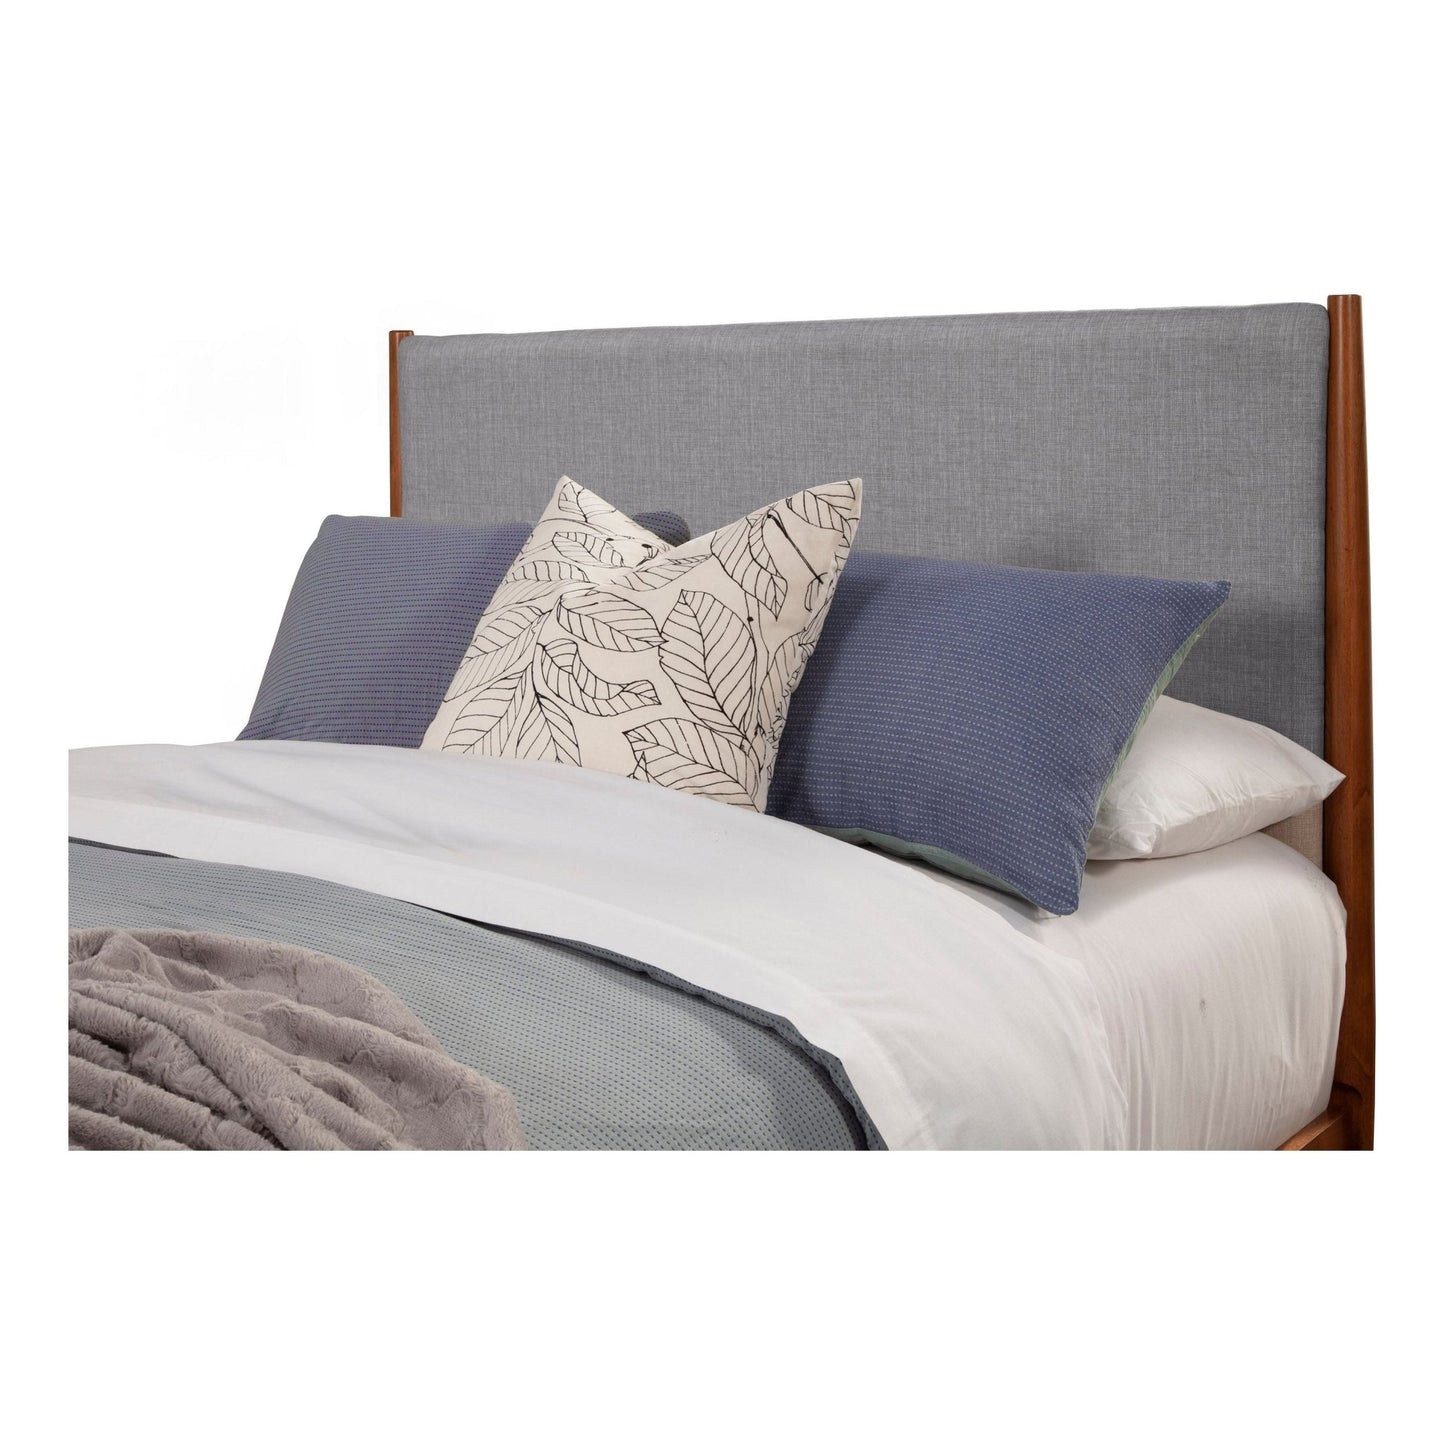 Flynn Panel Bed, Acorn/Grey - Alpine Furniture